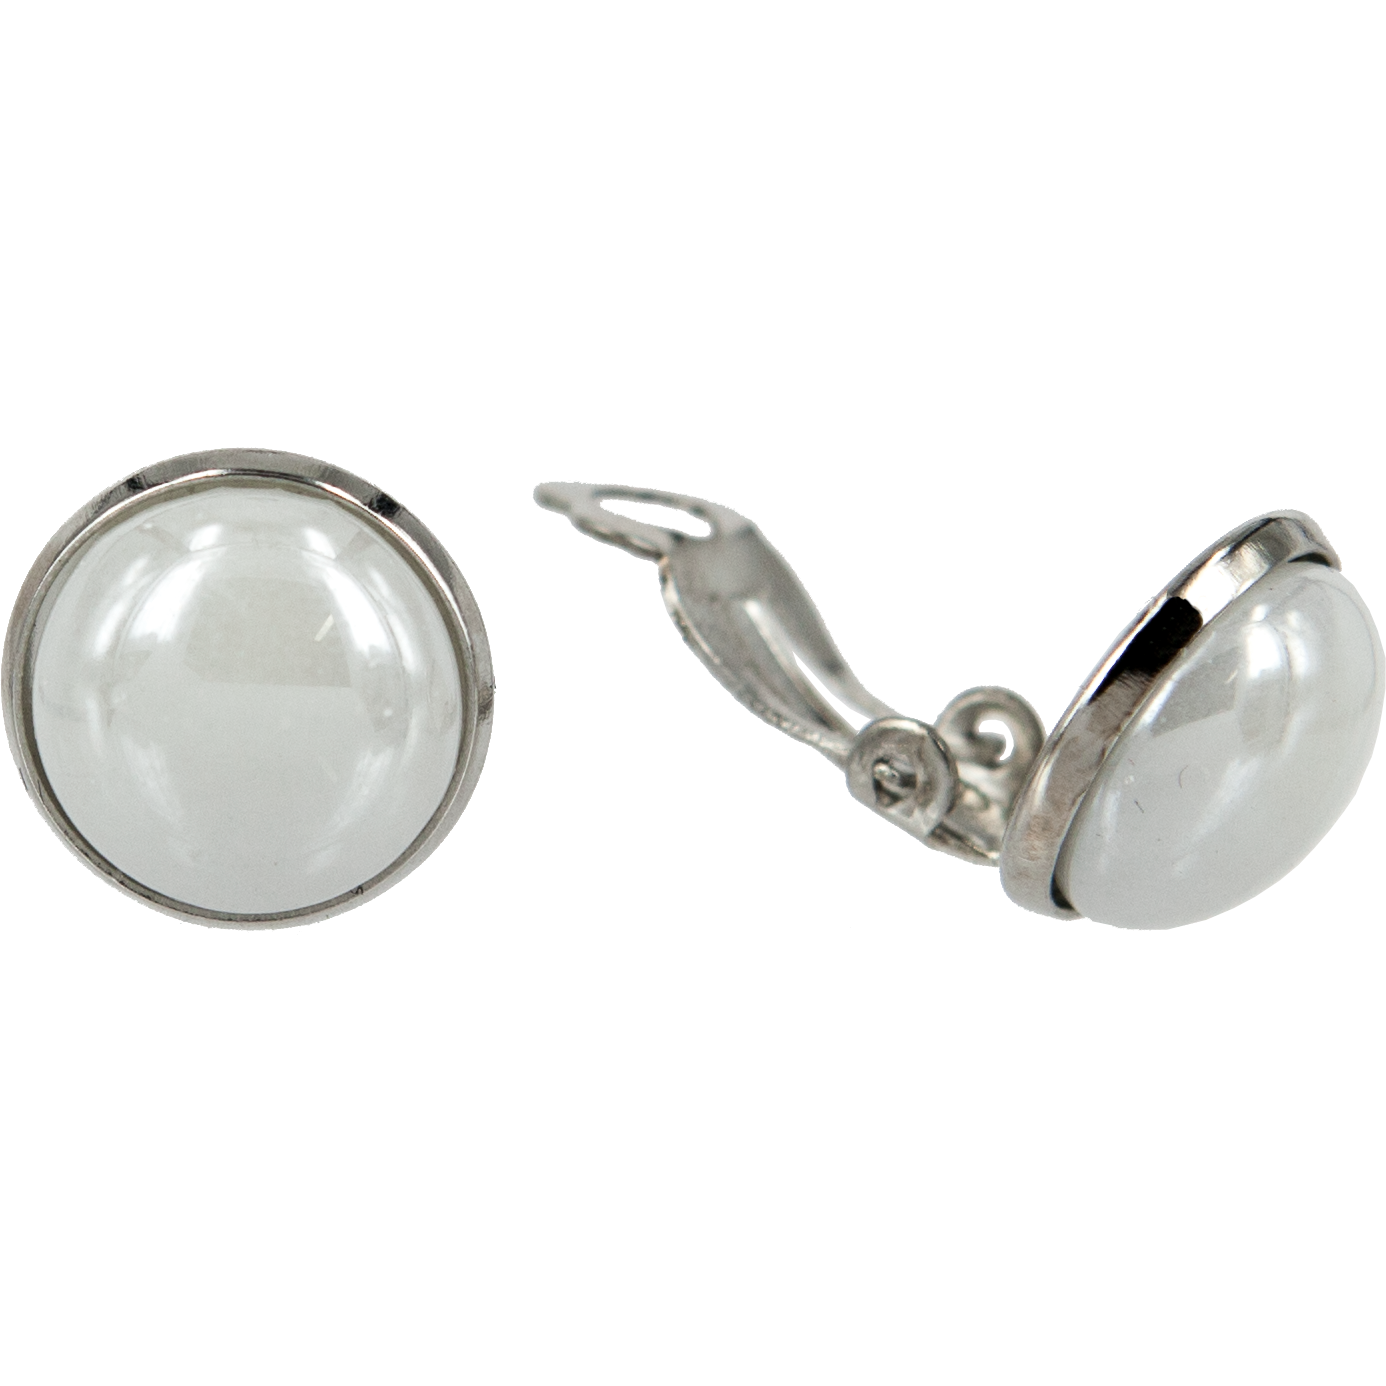 Ceramic clip earrings